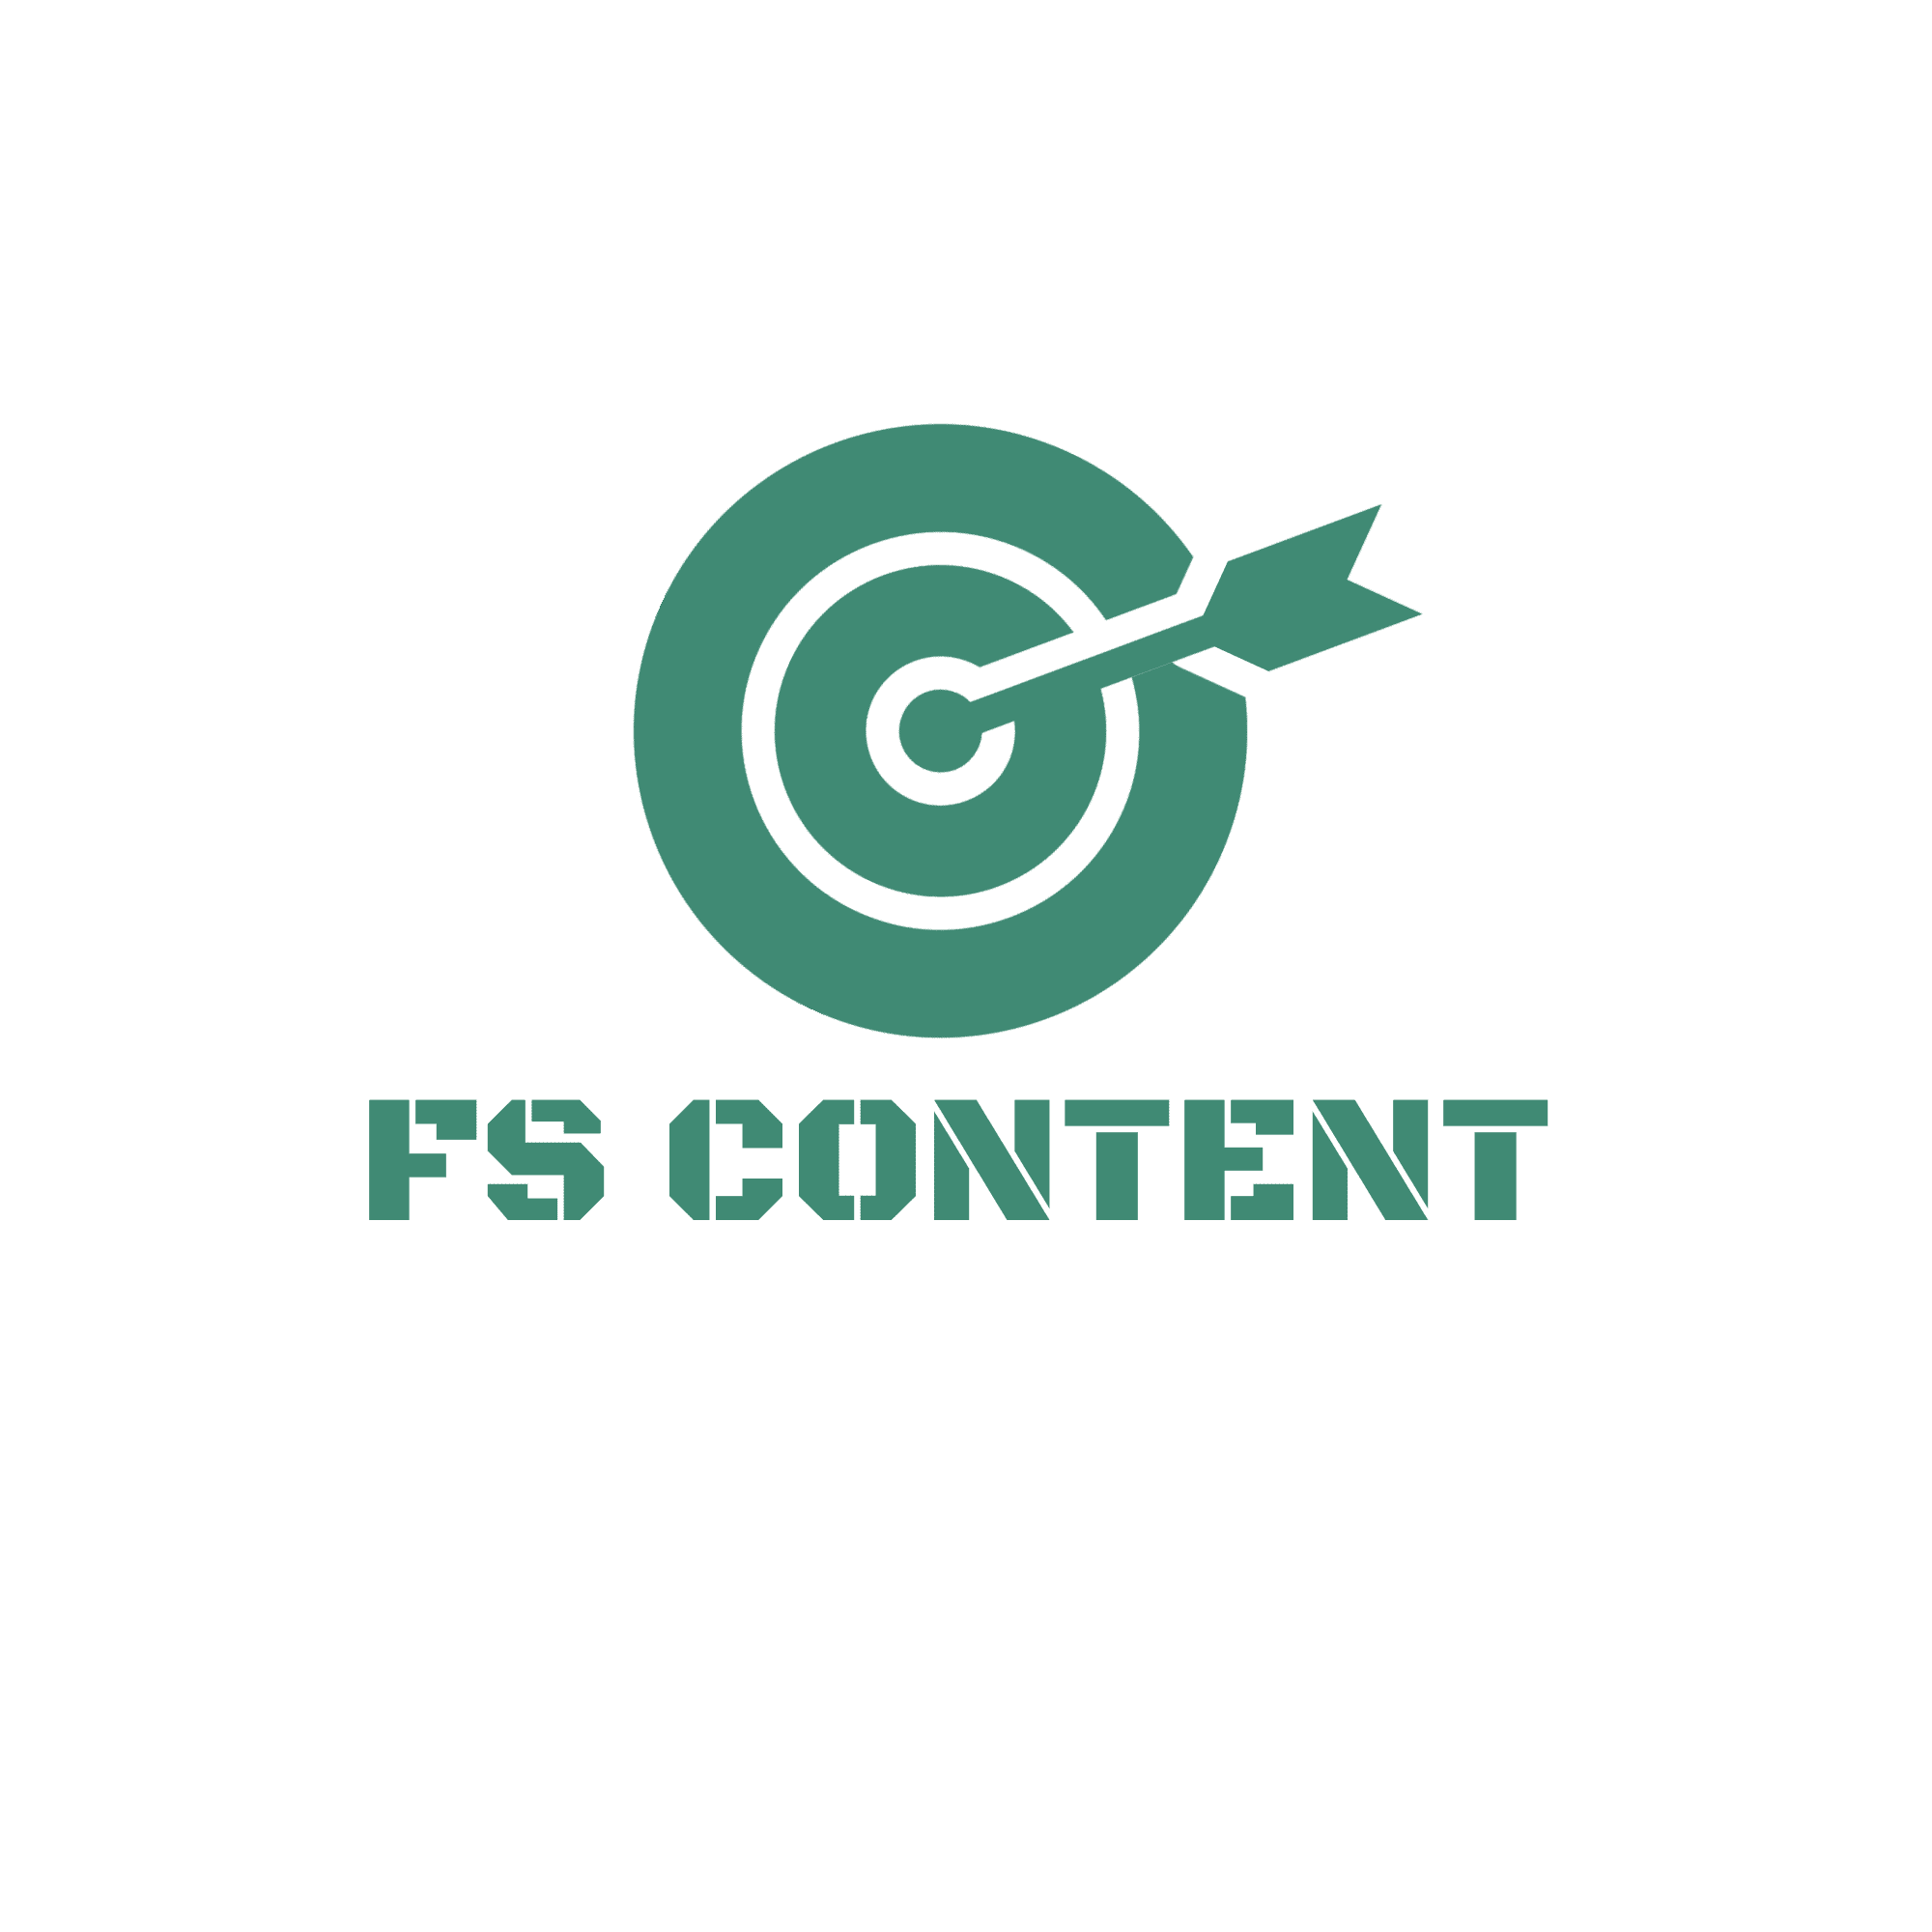 FS Content